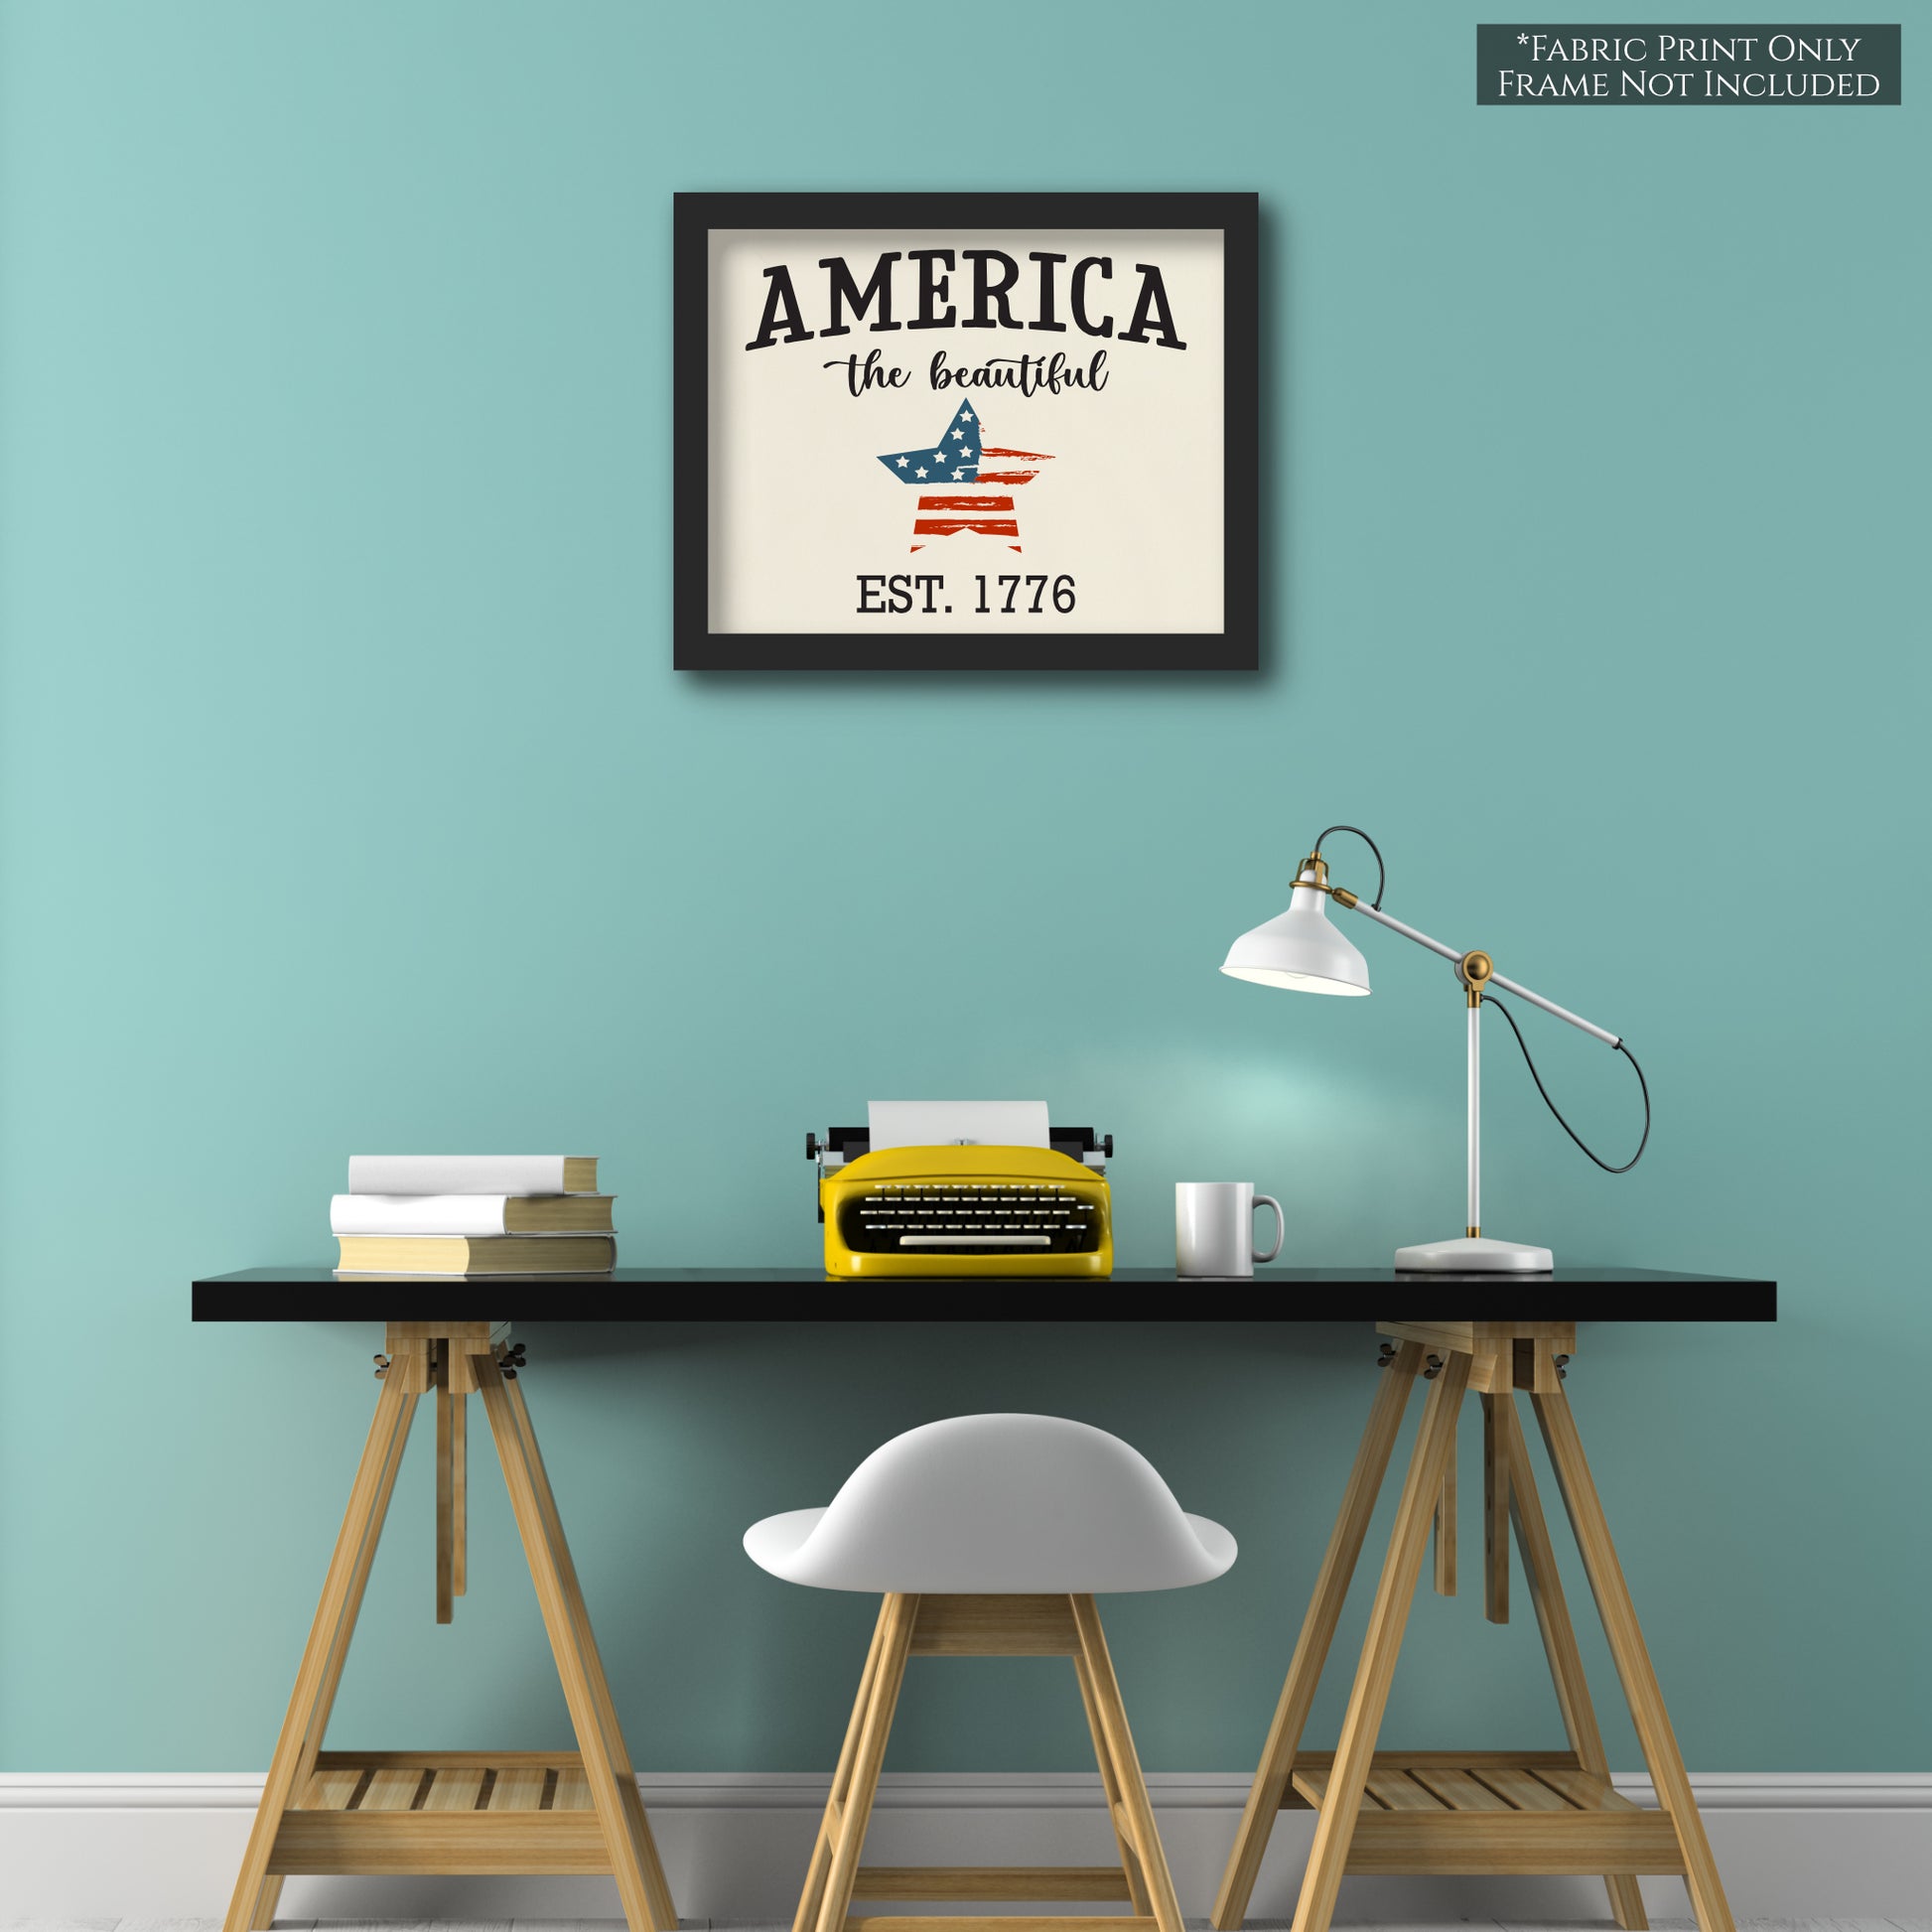 Americana Fabric, Patriotic Quilt - America the Beautiful, EST. 1776 - Wall Art